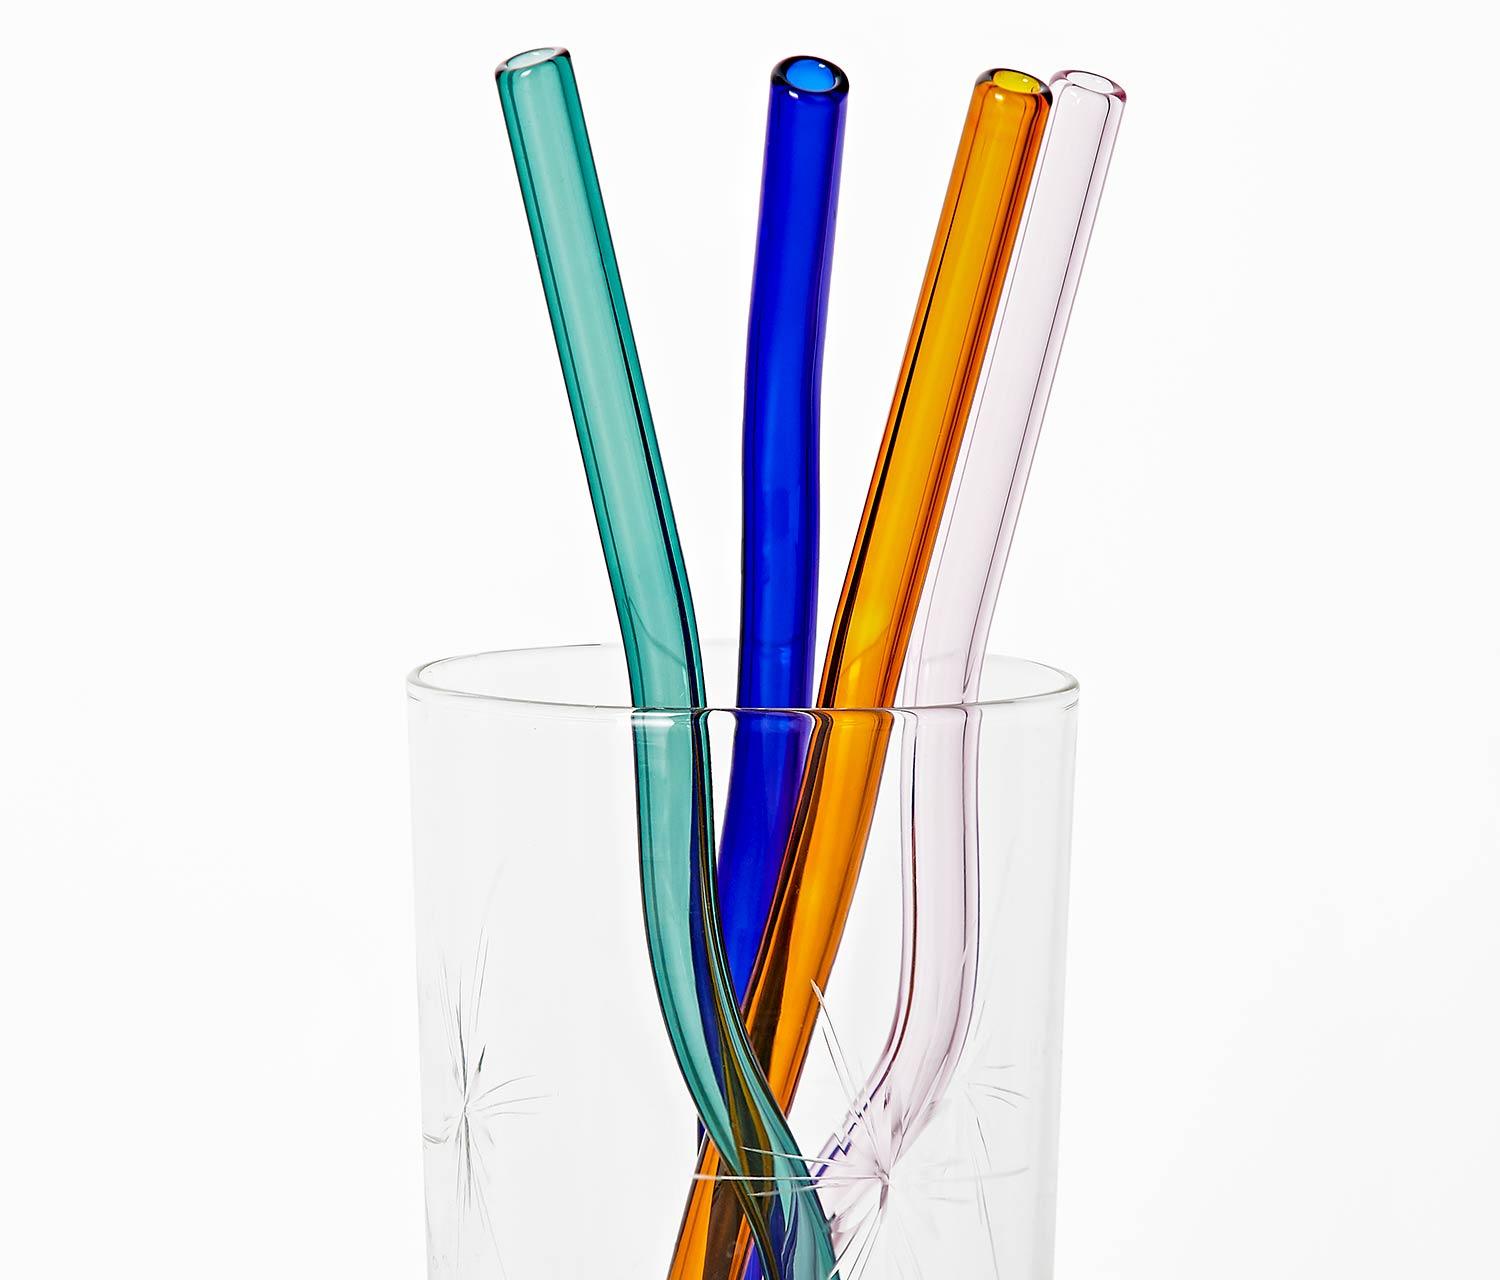 Colored glass straws